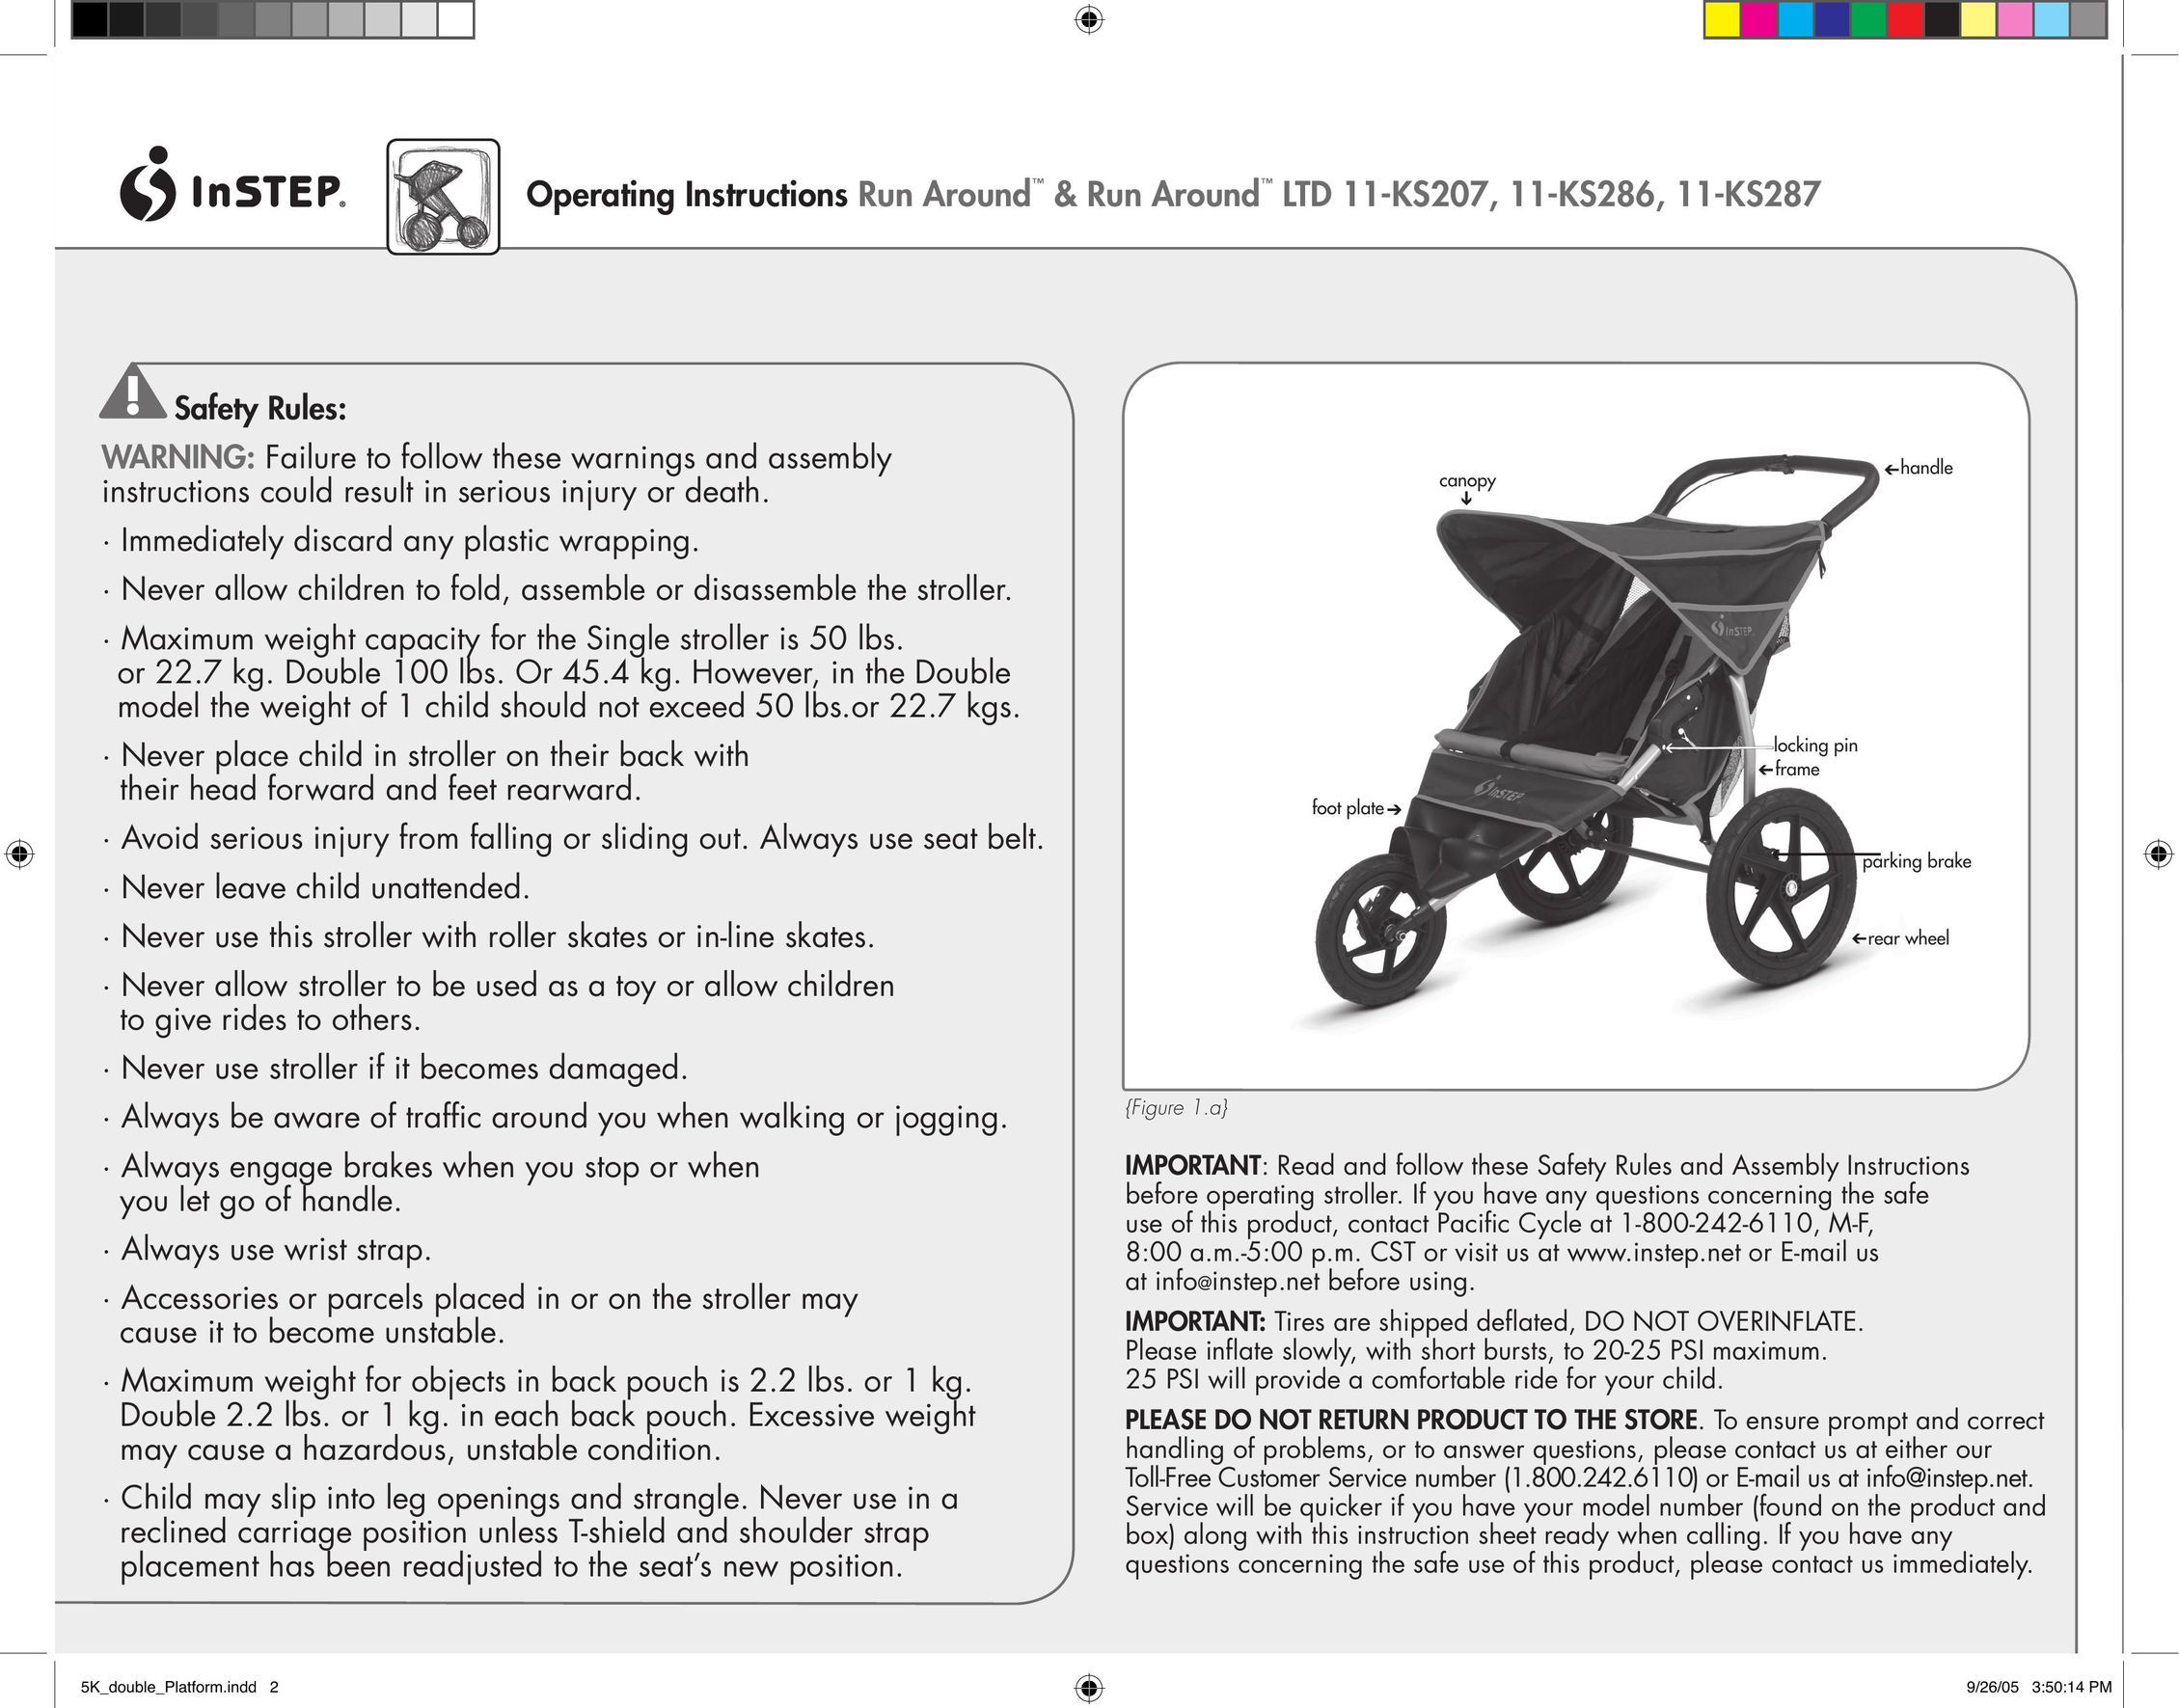 InStep 11-KS286 Stroller User Manual